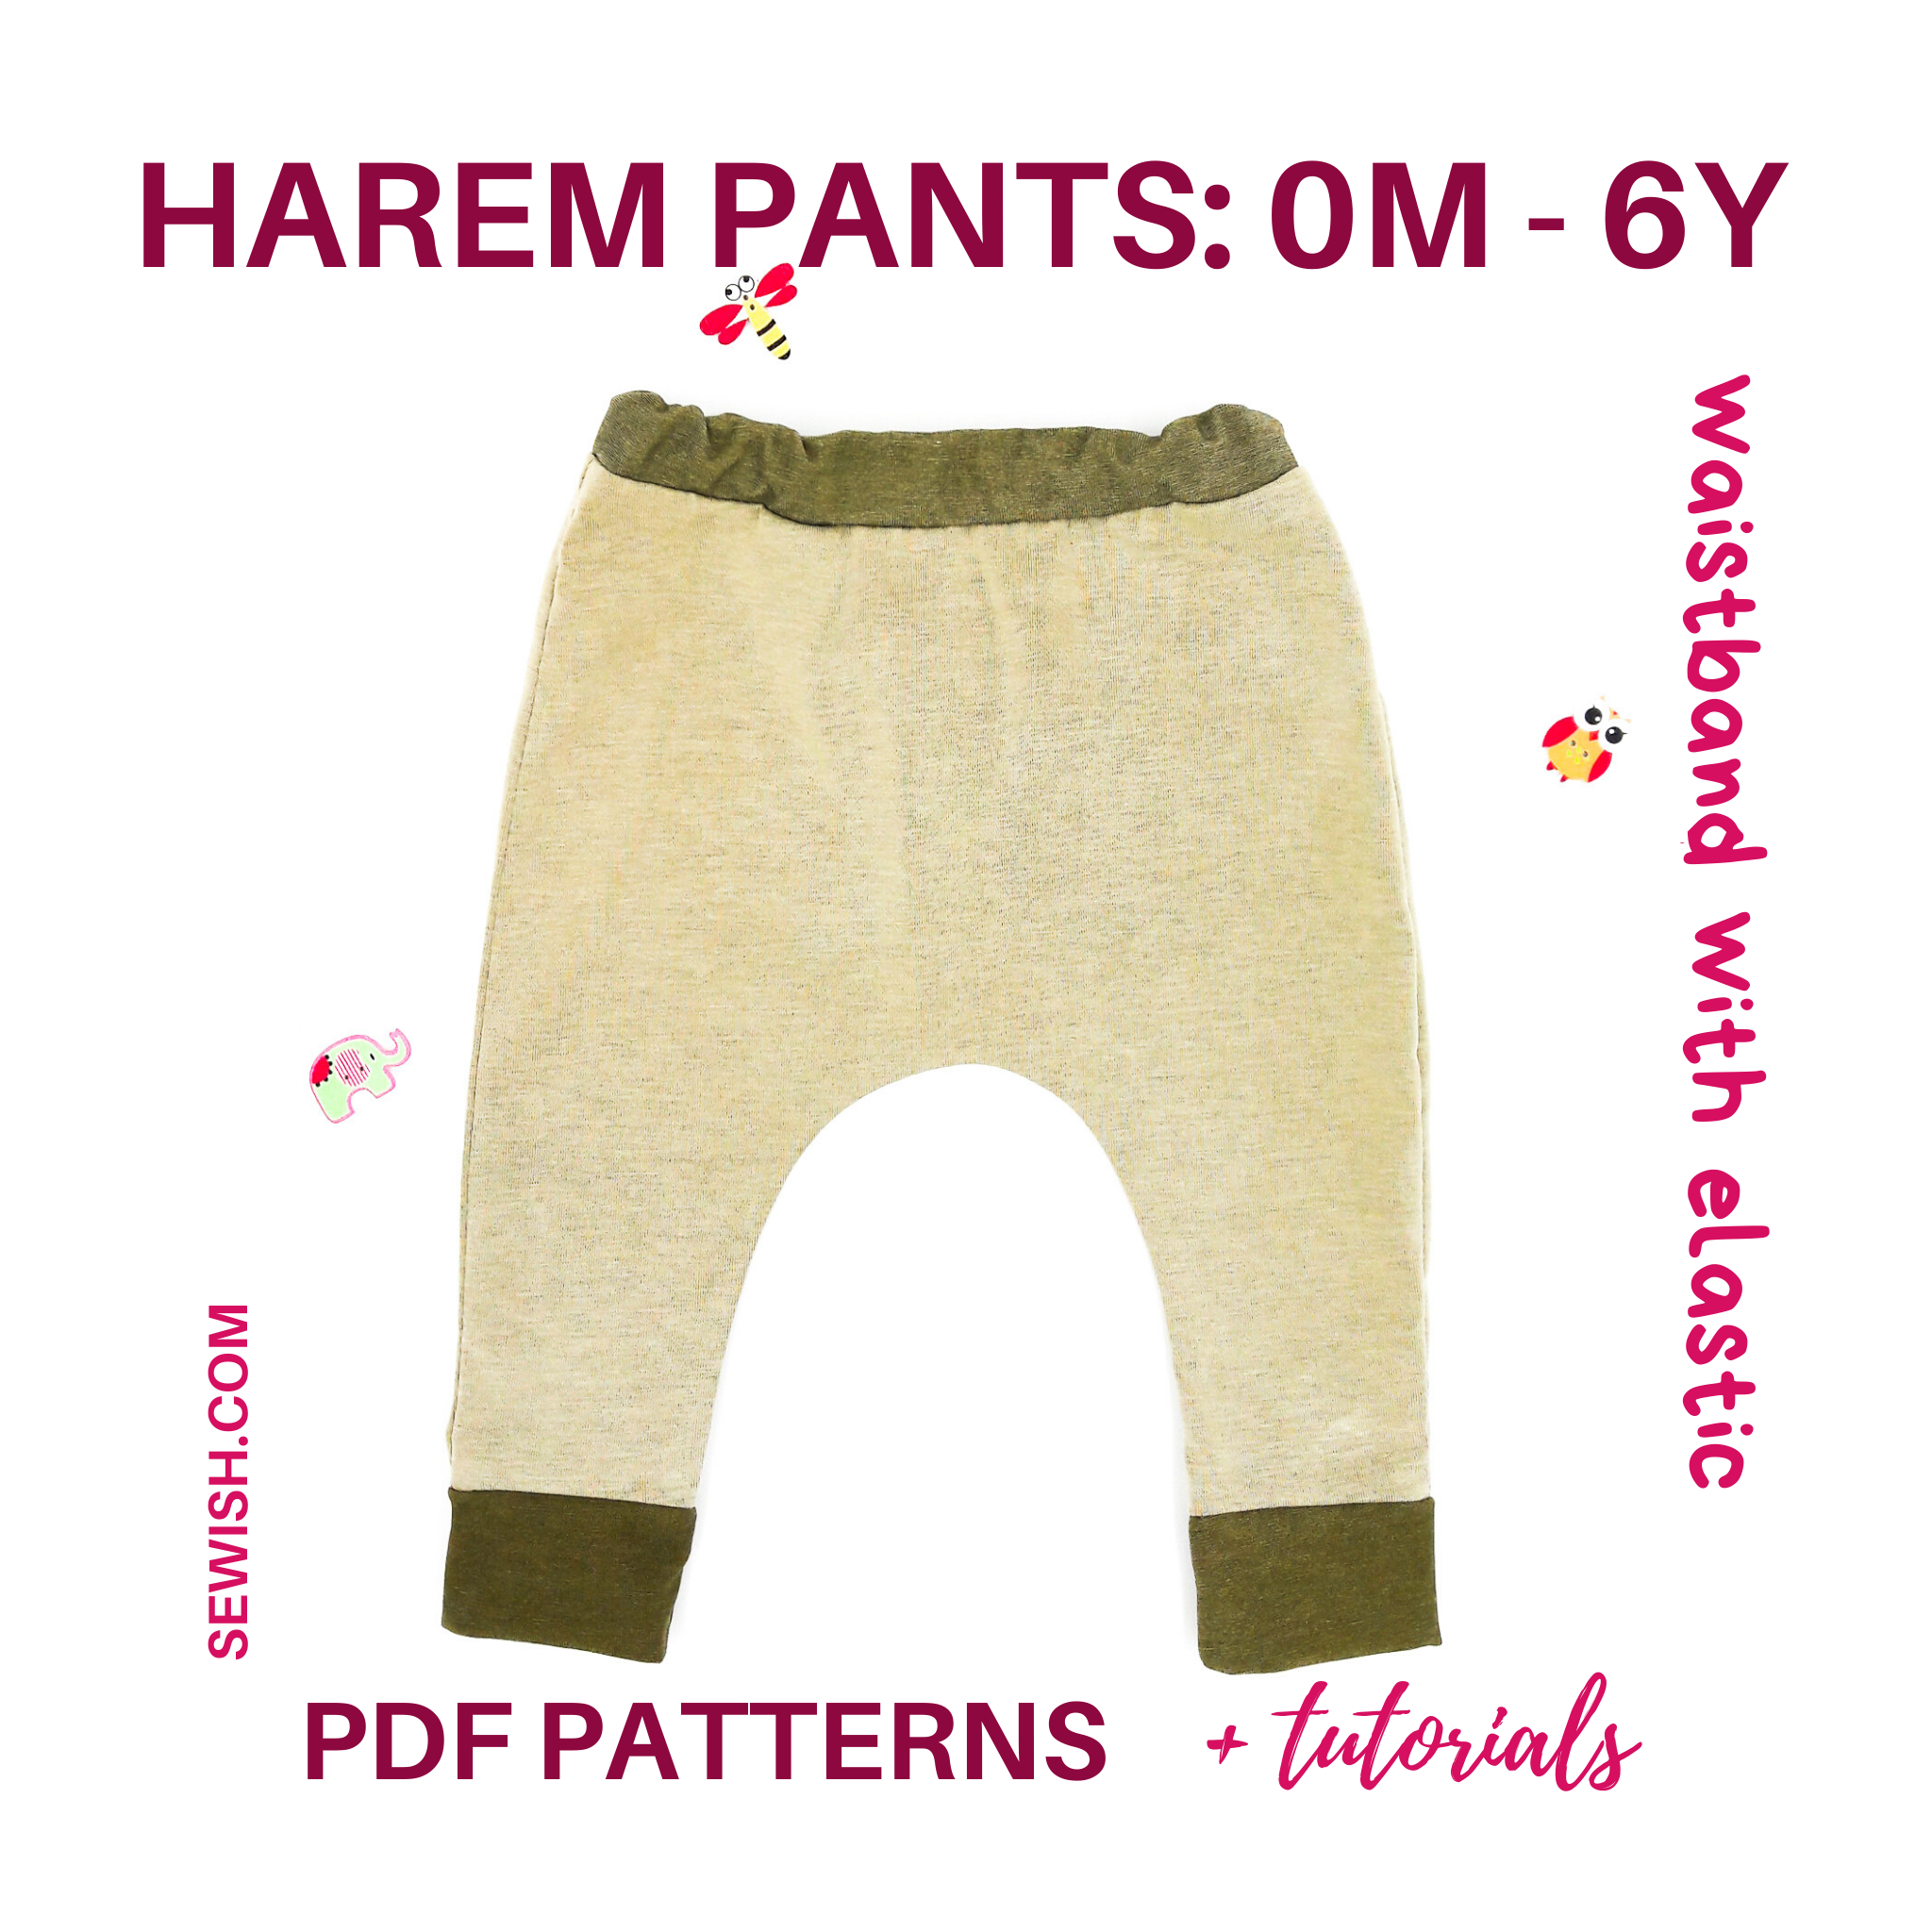 Stylish HAREM PANTS - DIY pattern to sew them - Sew Guide